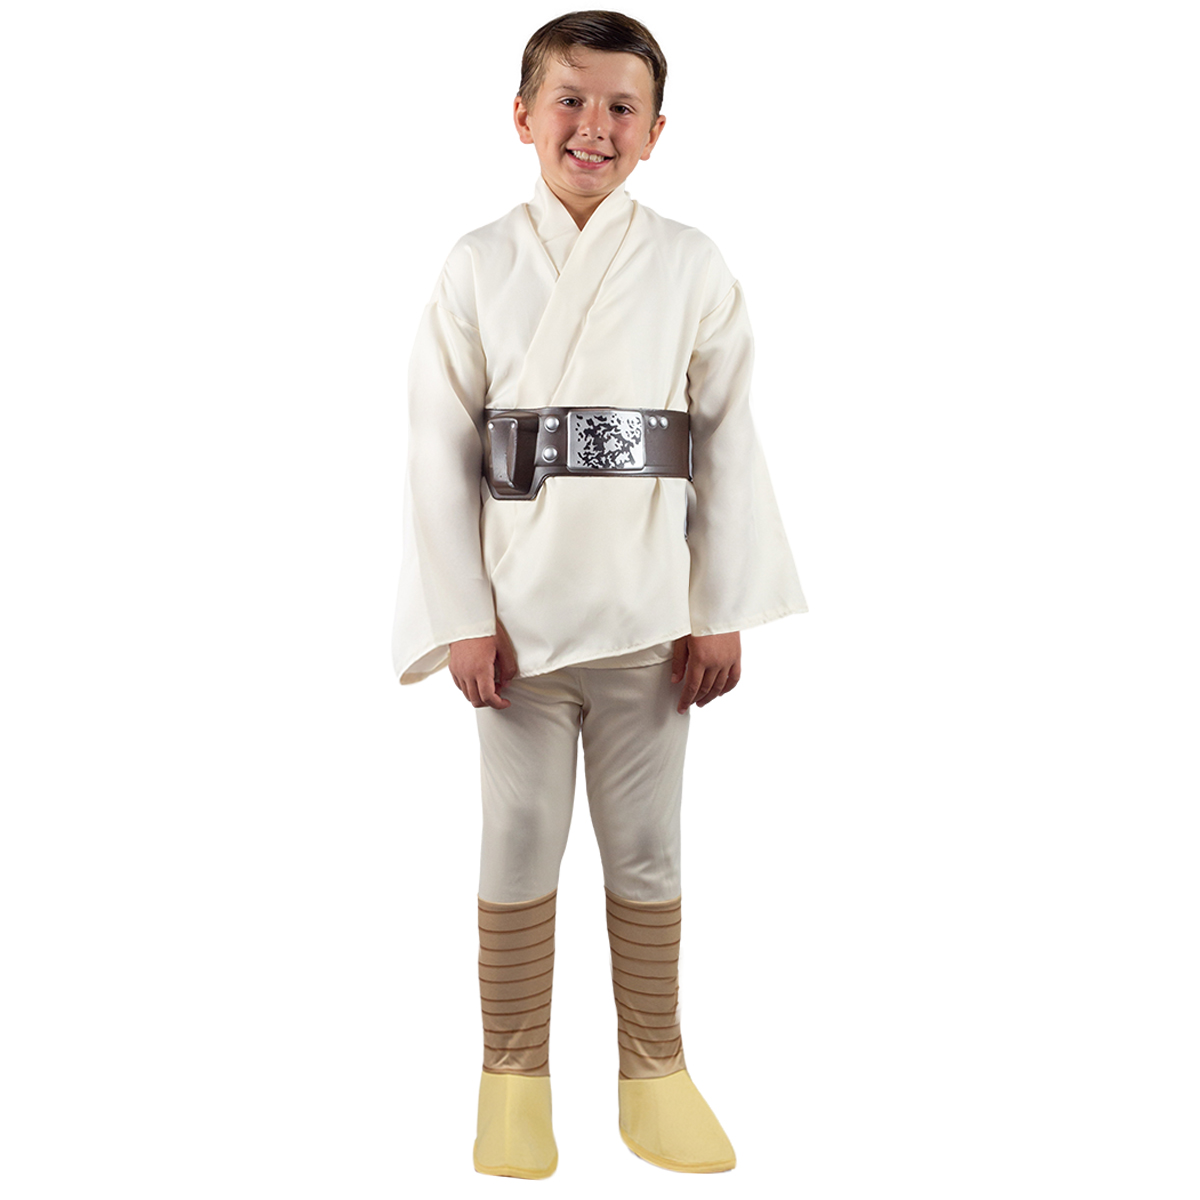 Rubie's Deluxe Luke Skywalker Halloween Fancy-Dress Costume for Child, Little Boys S - image 1 of 6